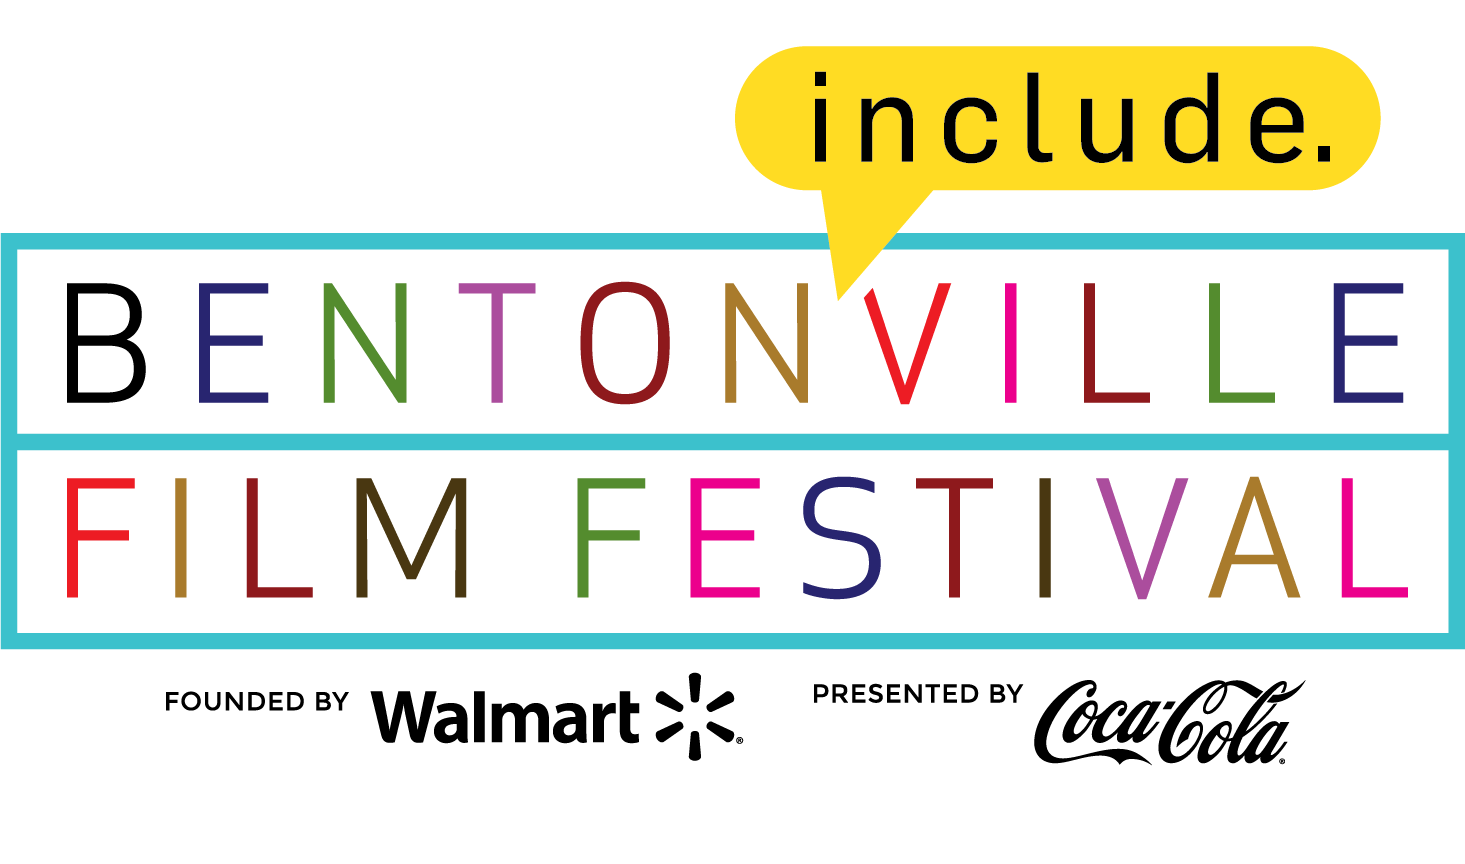 Bentonville film festival